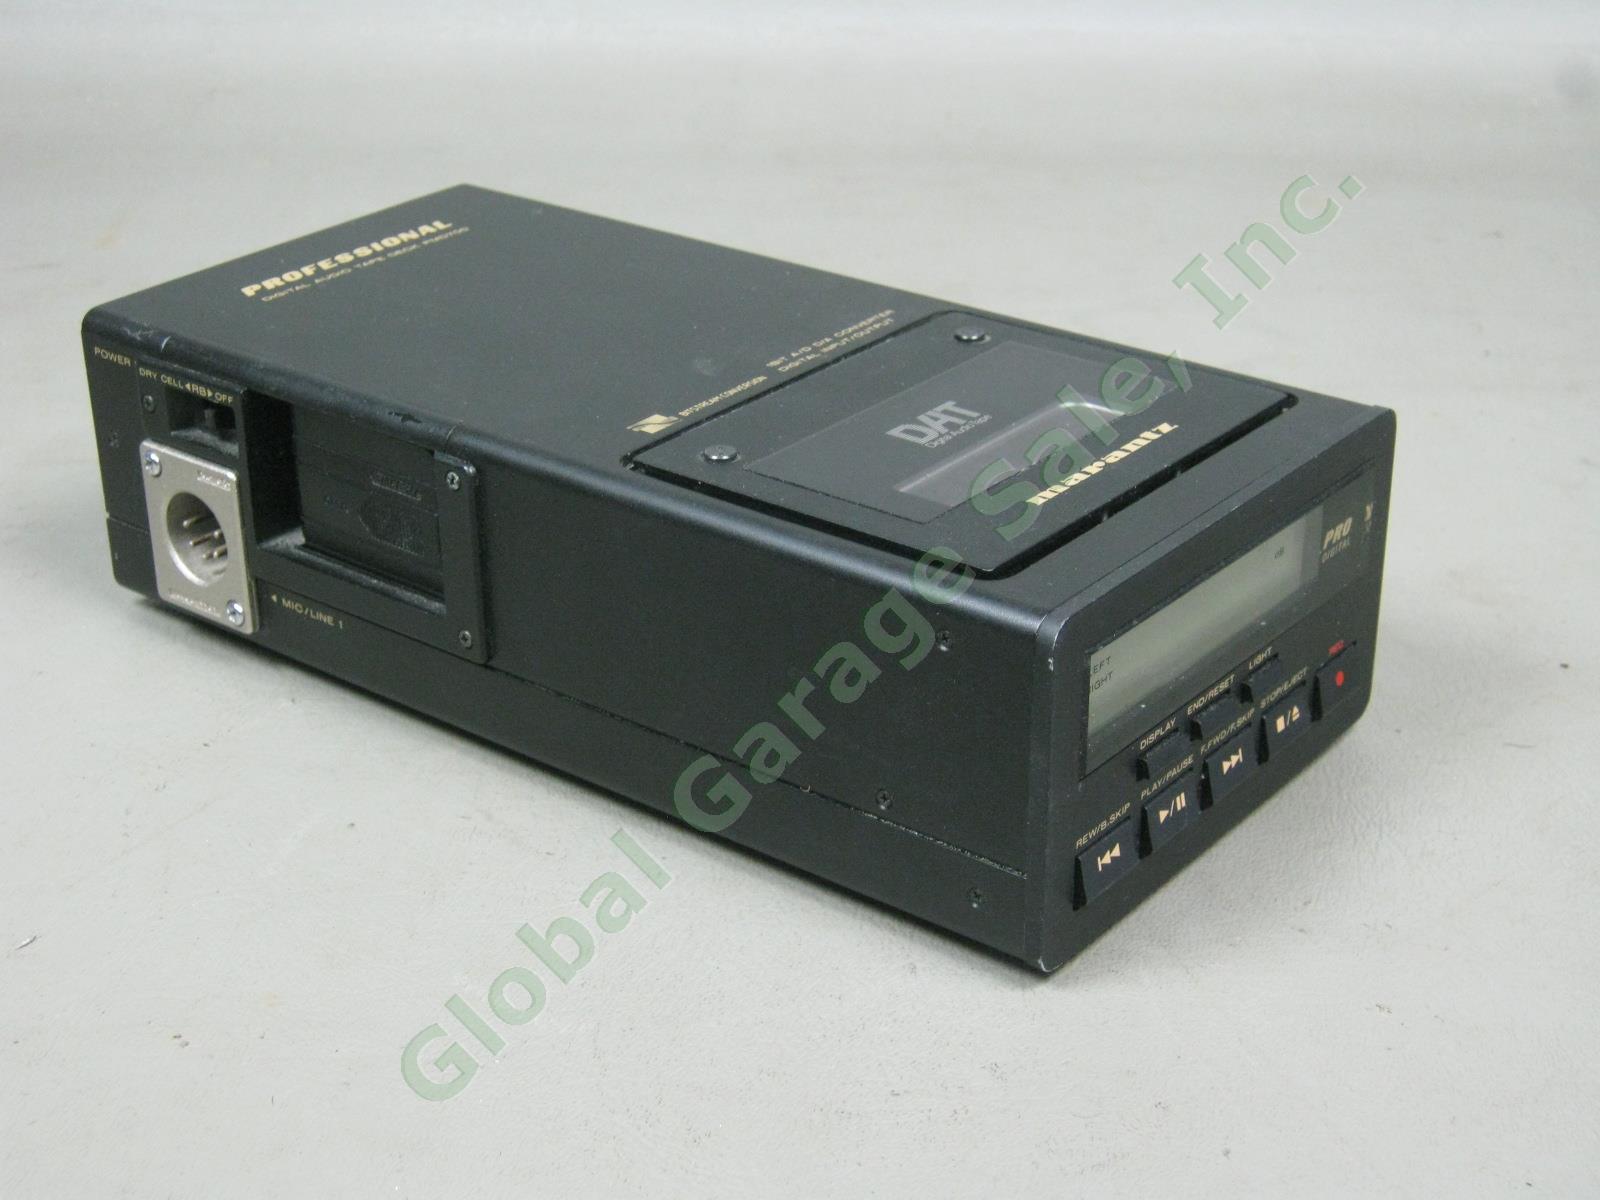 Marantz PMD700 Professional DAT Digital Audio Tape Deck Recorder +AC Adapter Lot 5